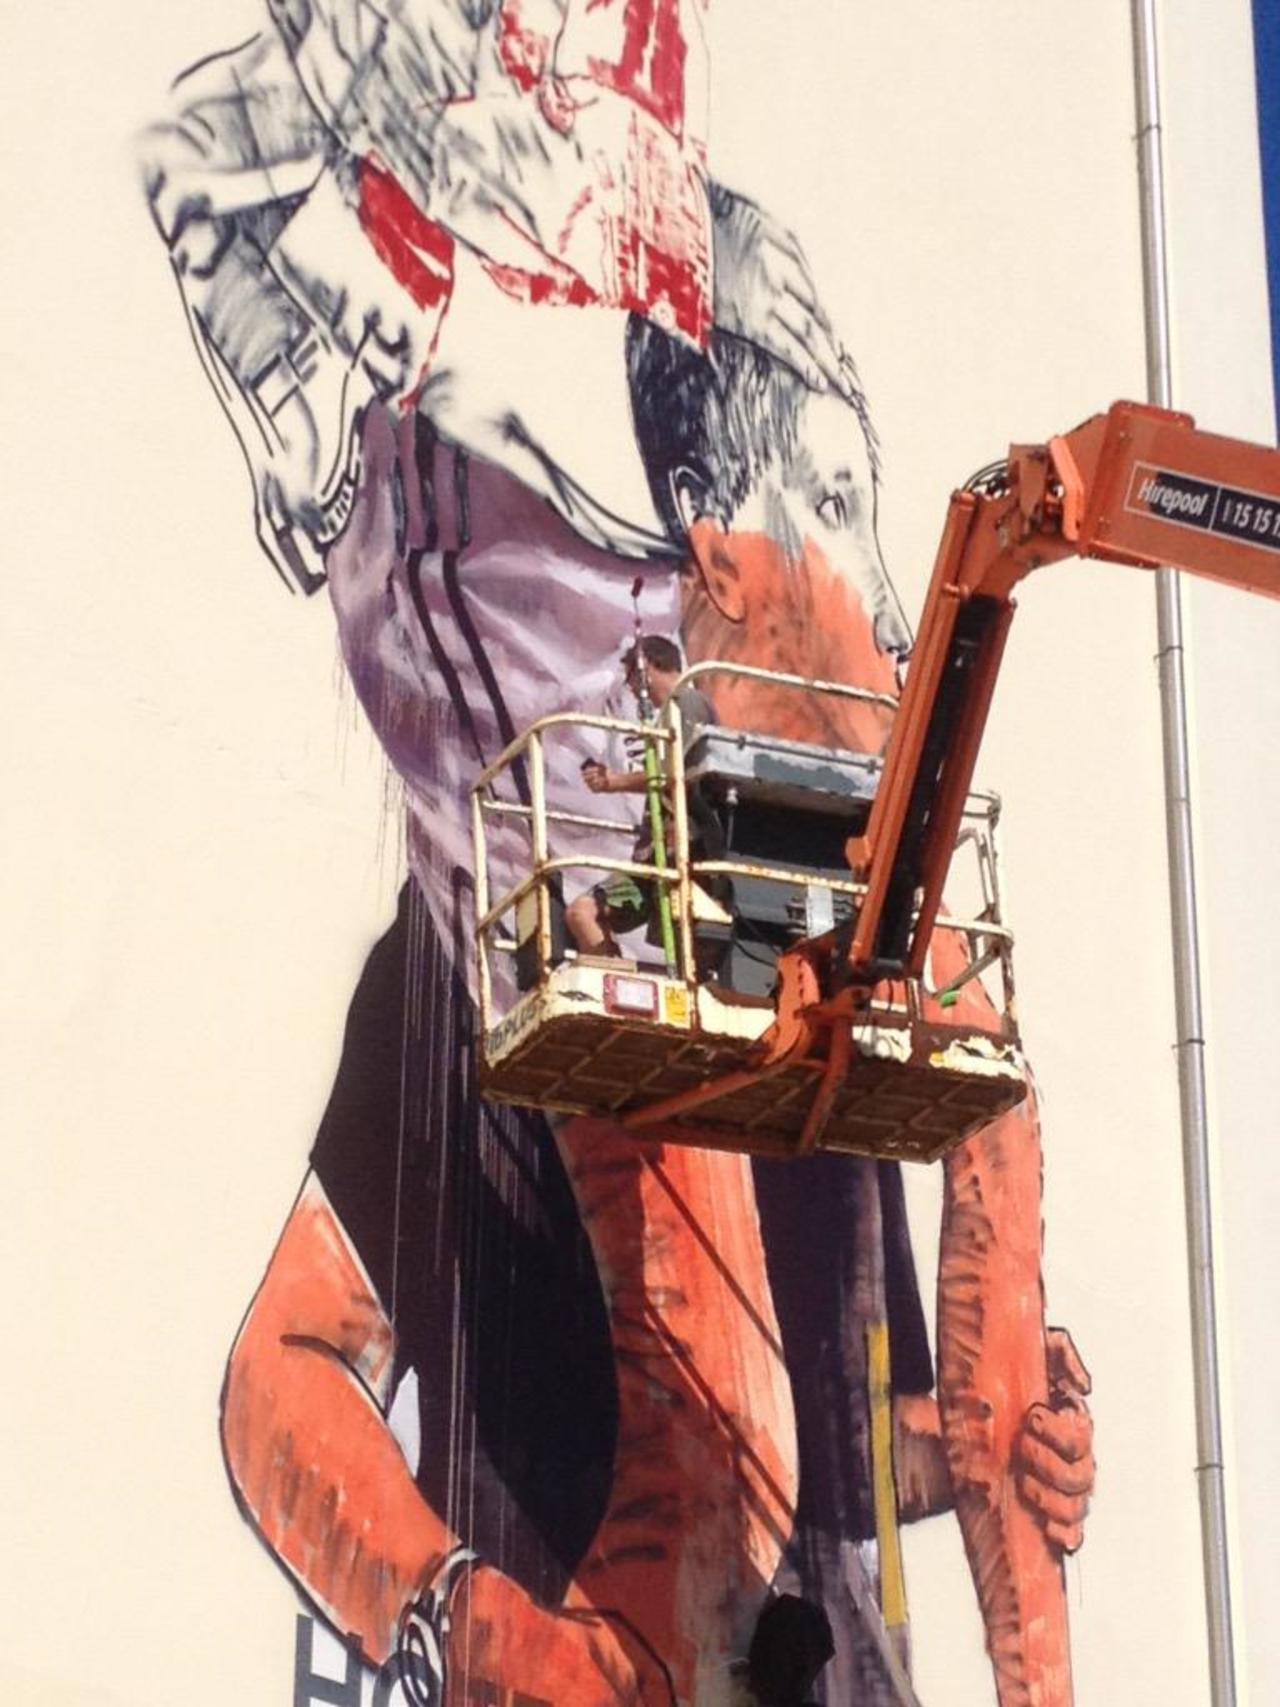 #FintanMagee work in progress Dunedin New Zealand #streetart #graffiti #mural http://t.co/vEPV4KDe4c